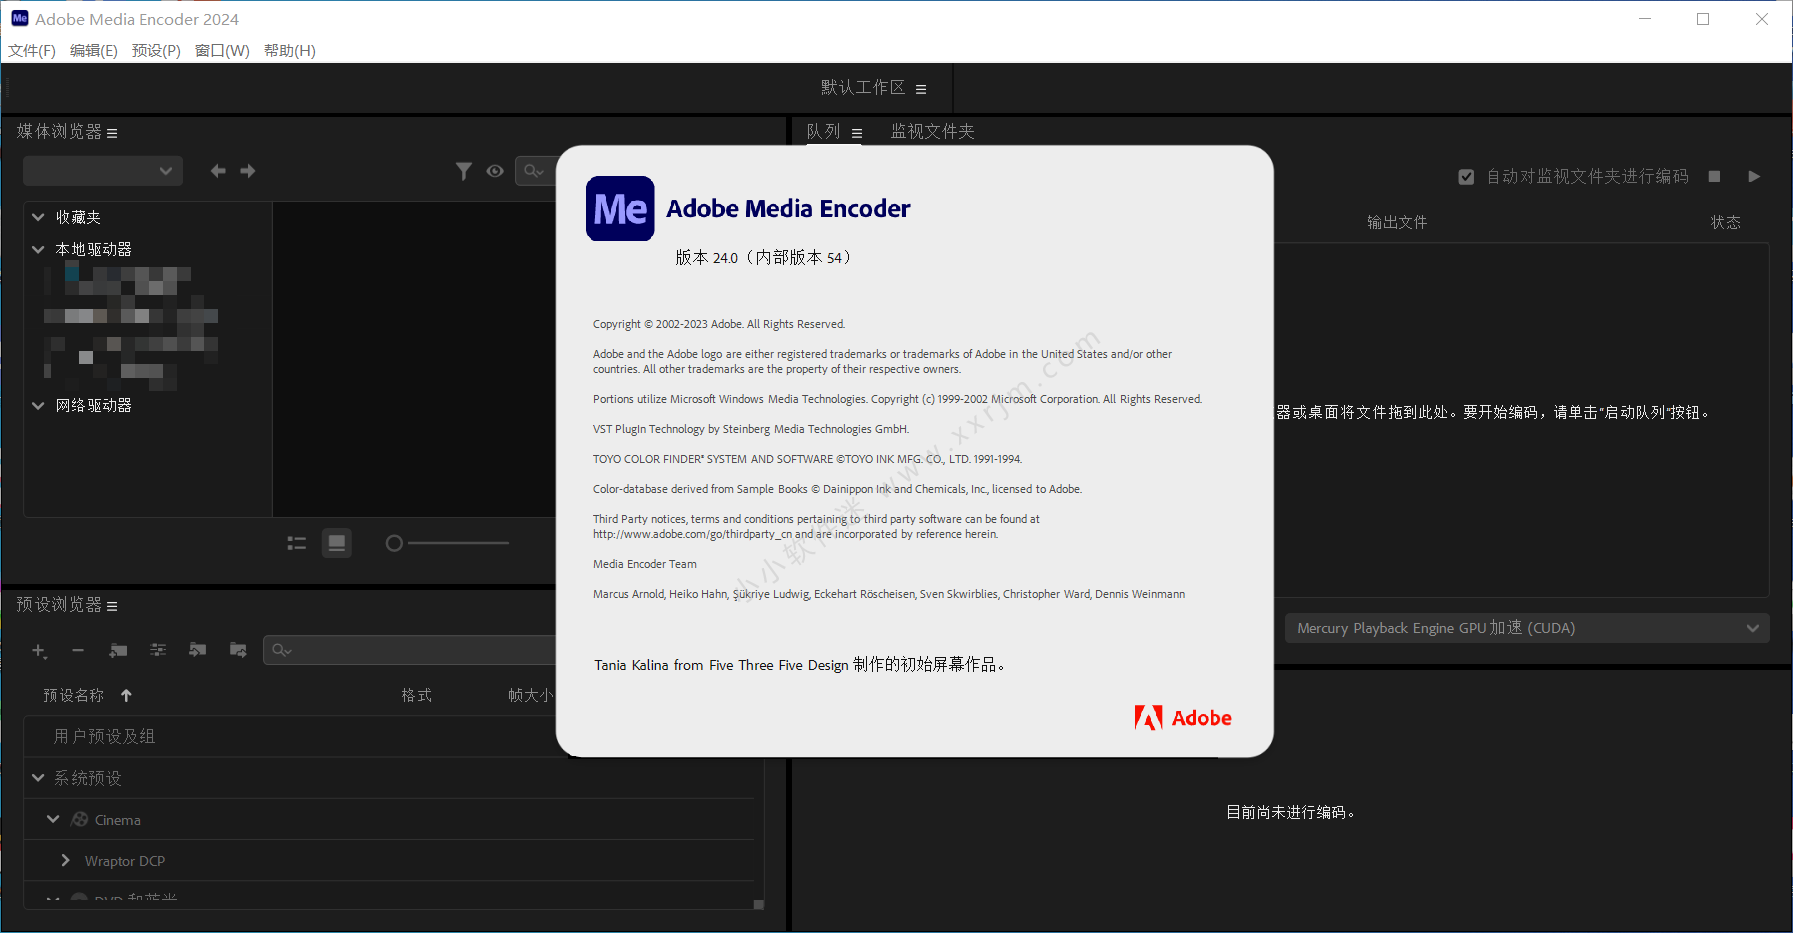 Adobe Media Encoder 2024 v24.0.0.54 free downloads